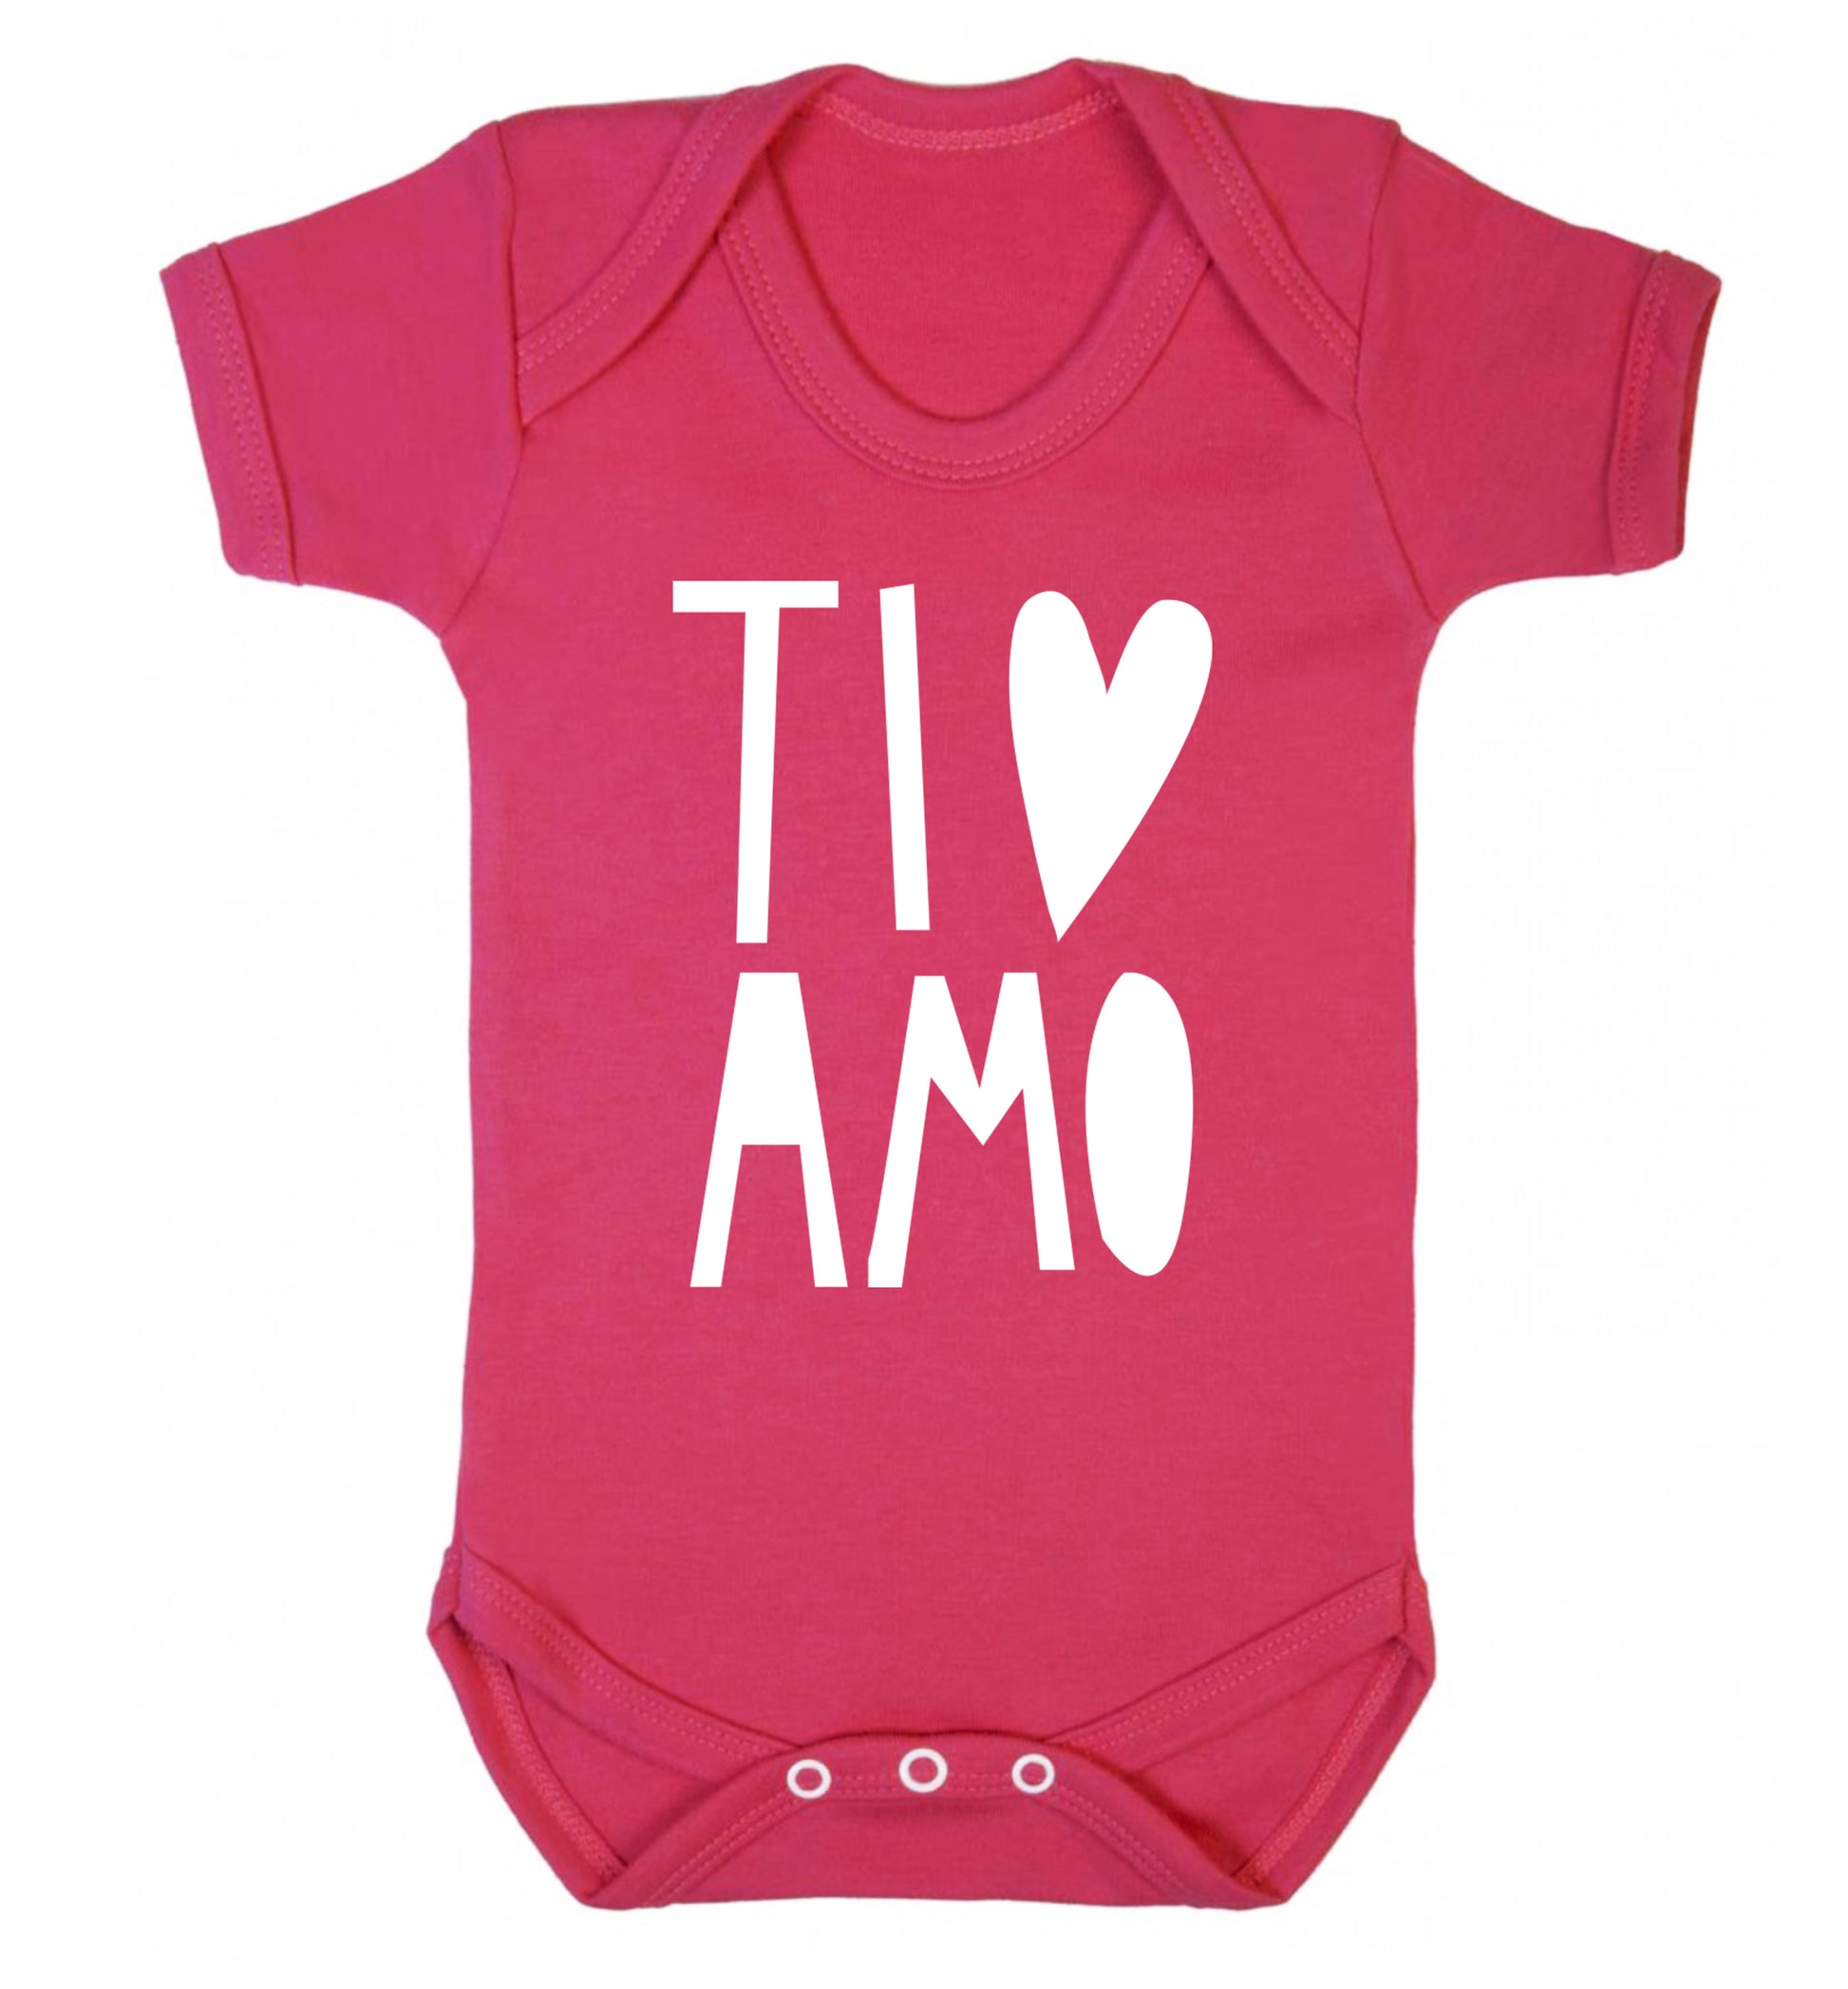 Ti amo - I love you Baby Vest dark pink 18-24 months